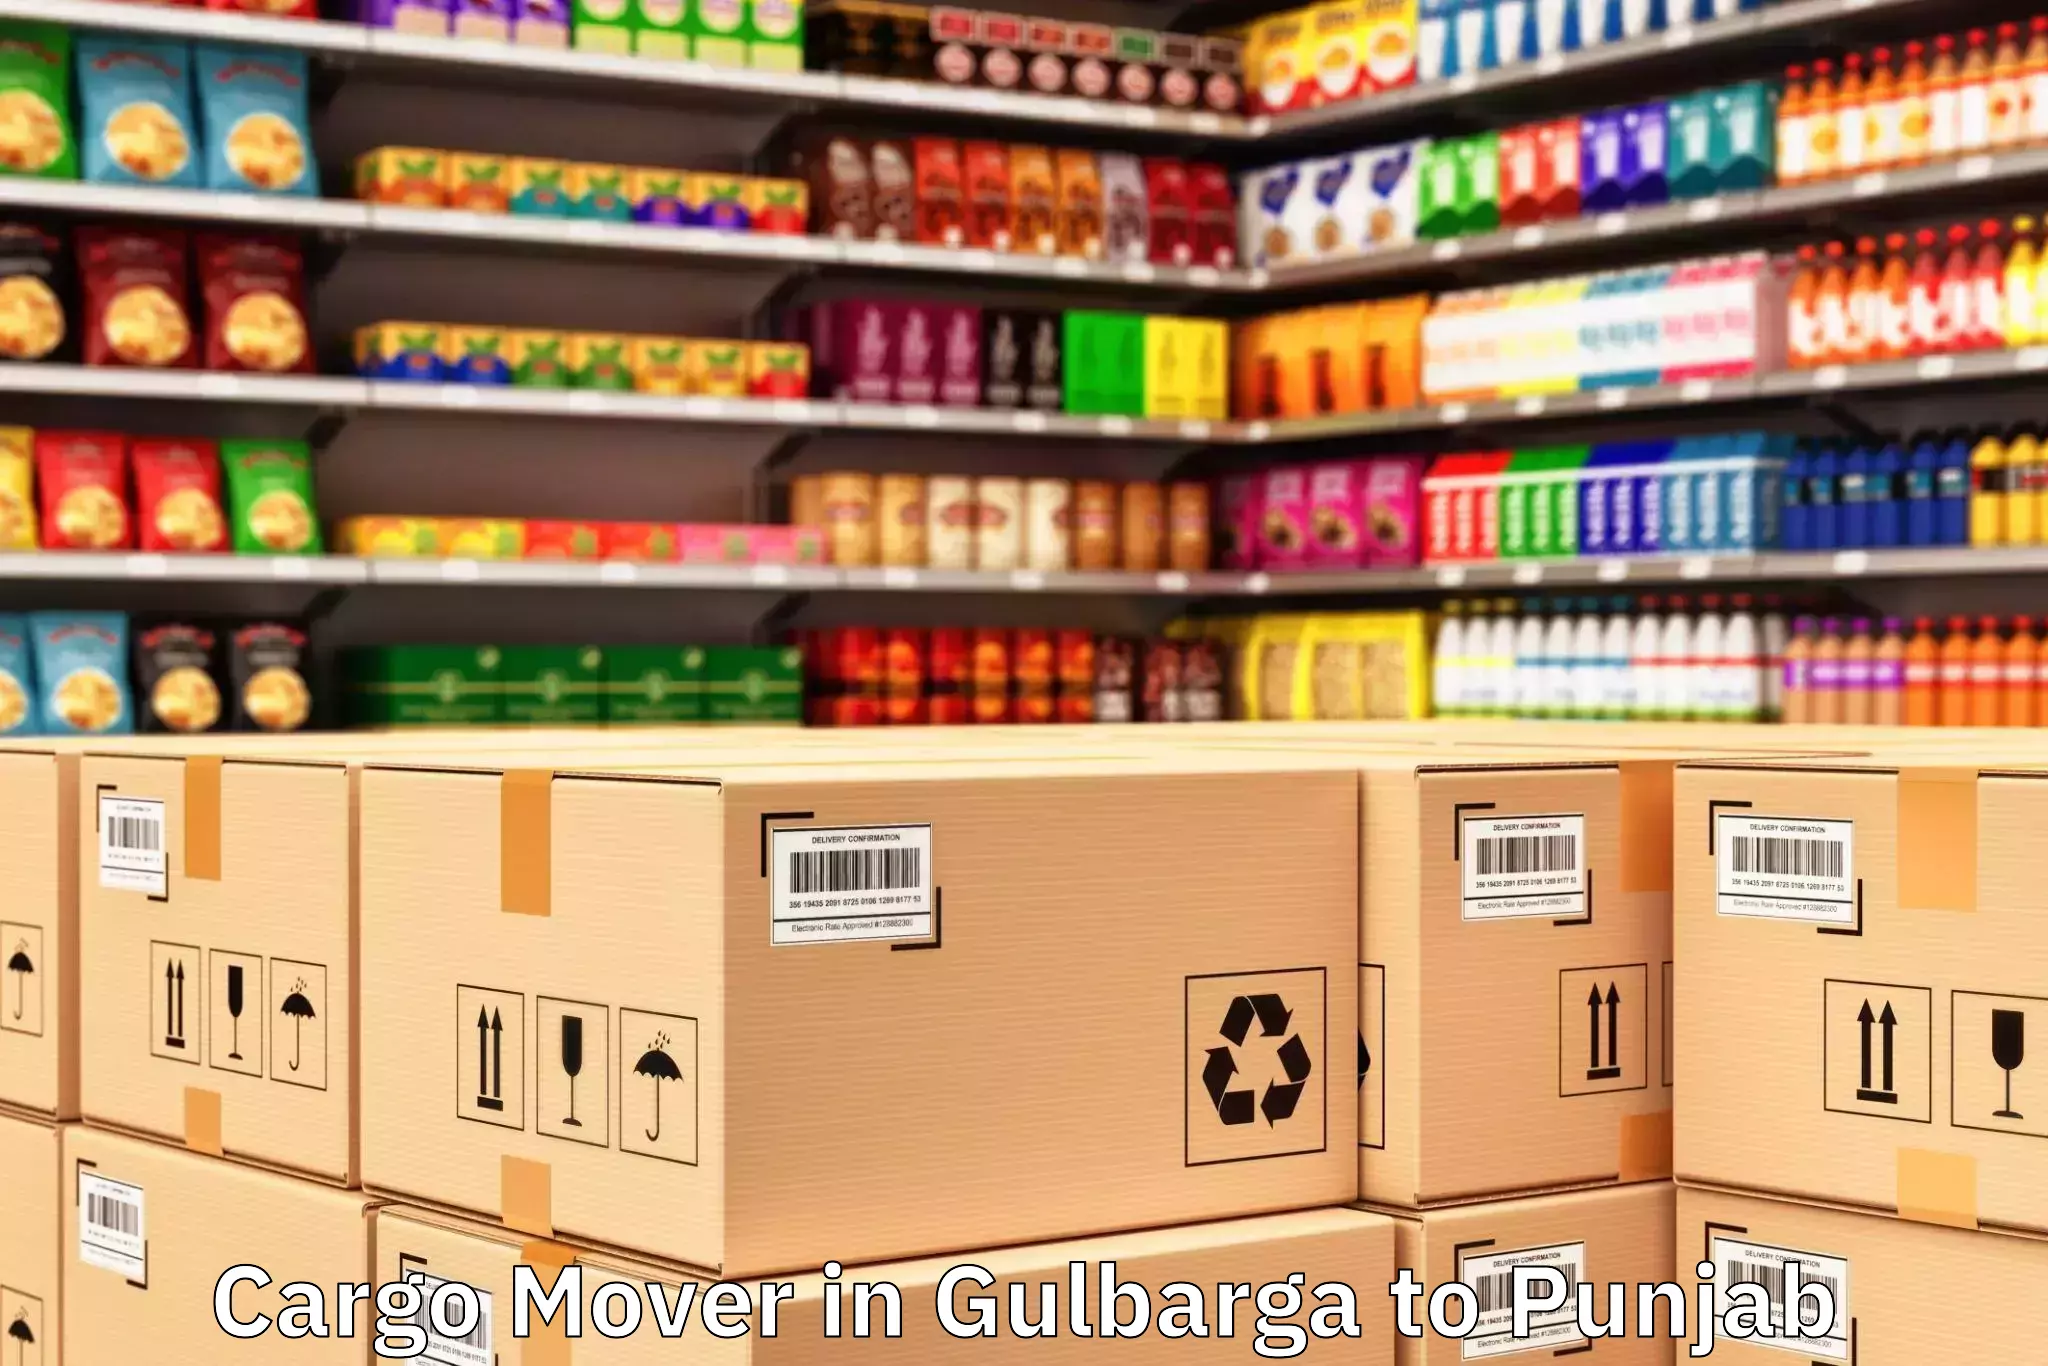 Gulbarga to Vr Punjab Mall Cargo Mover Booking